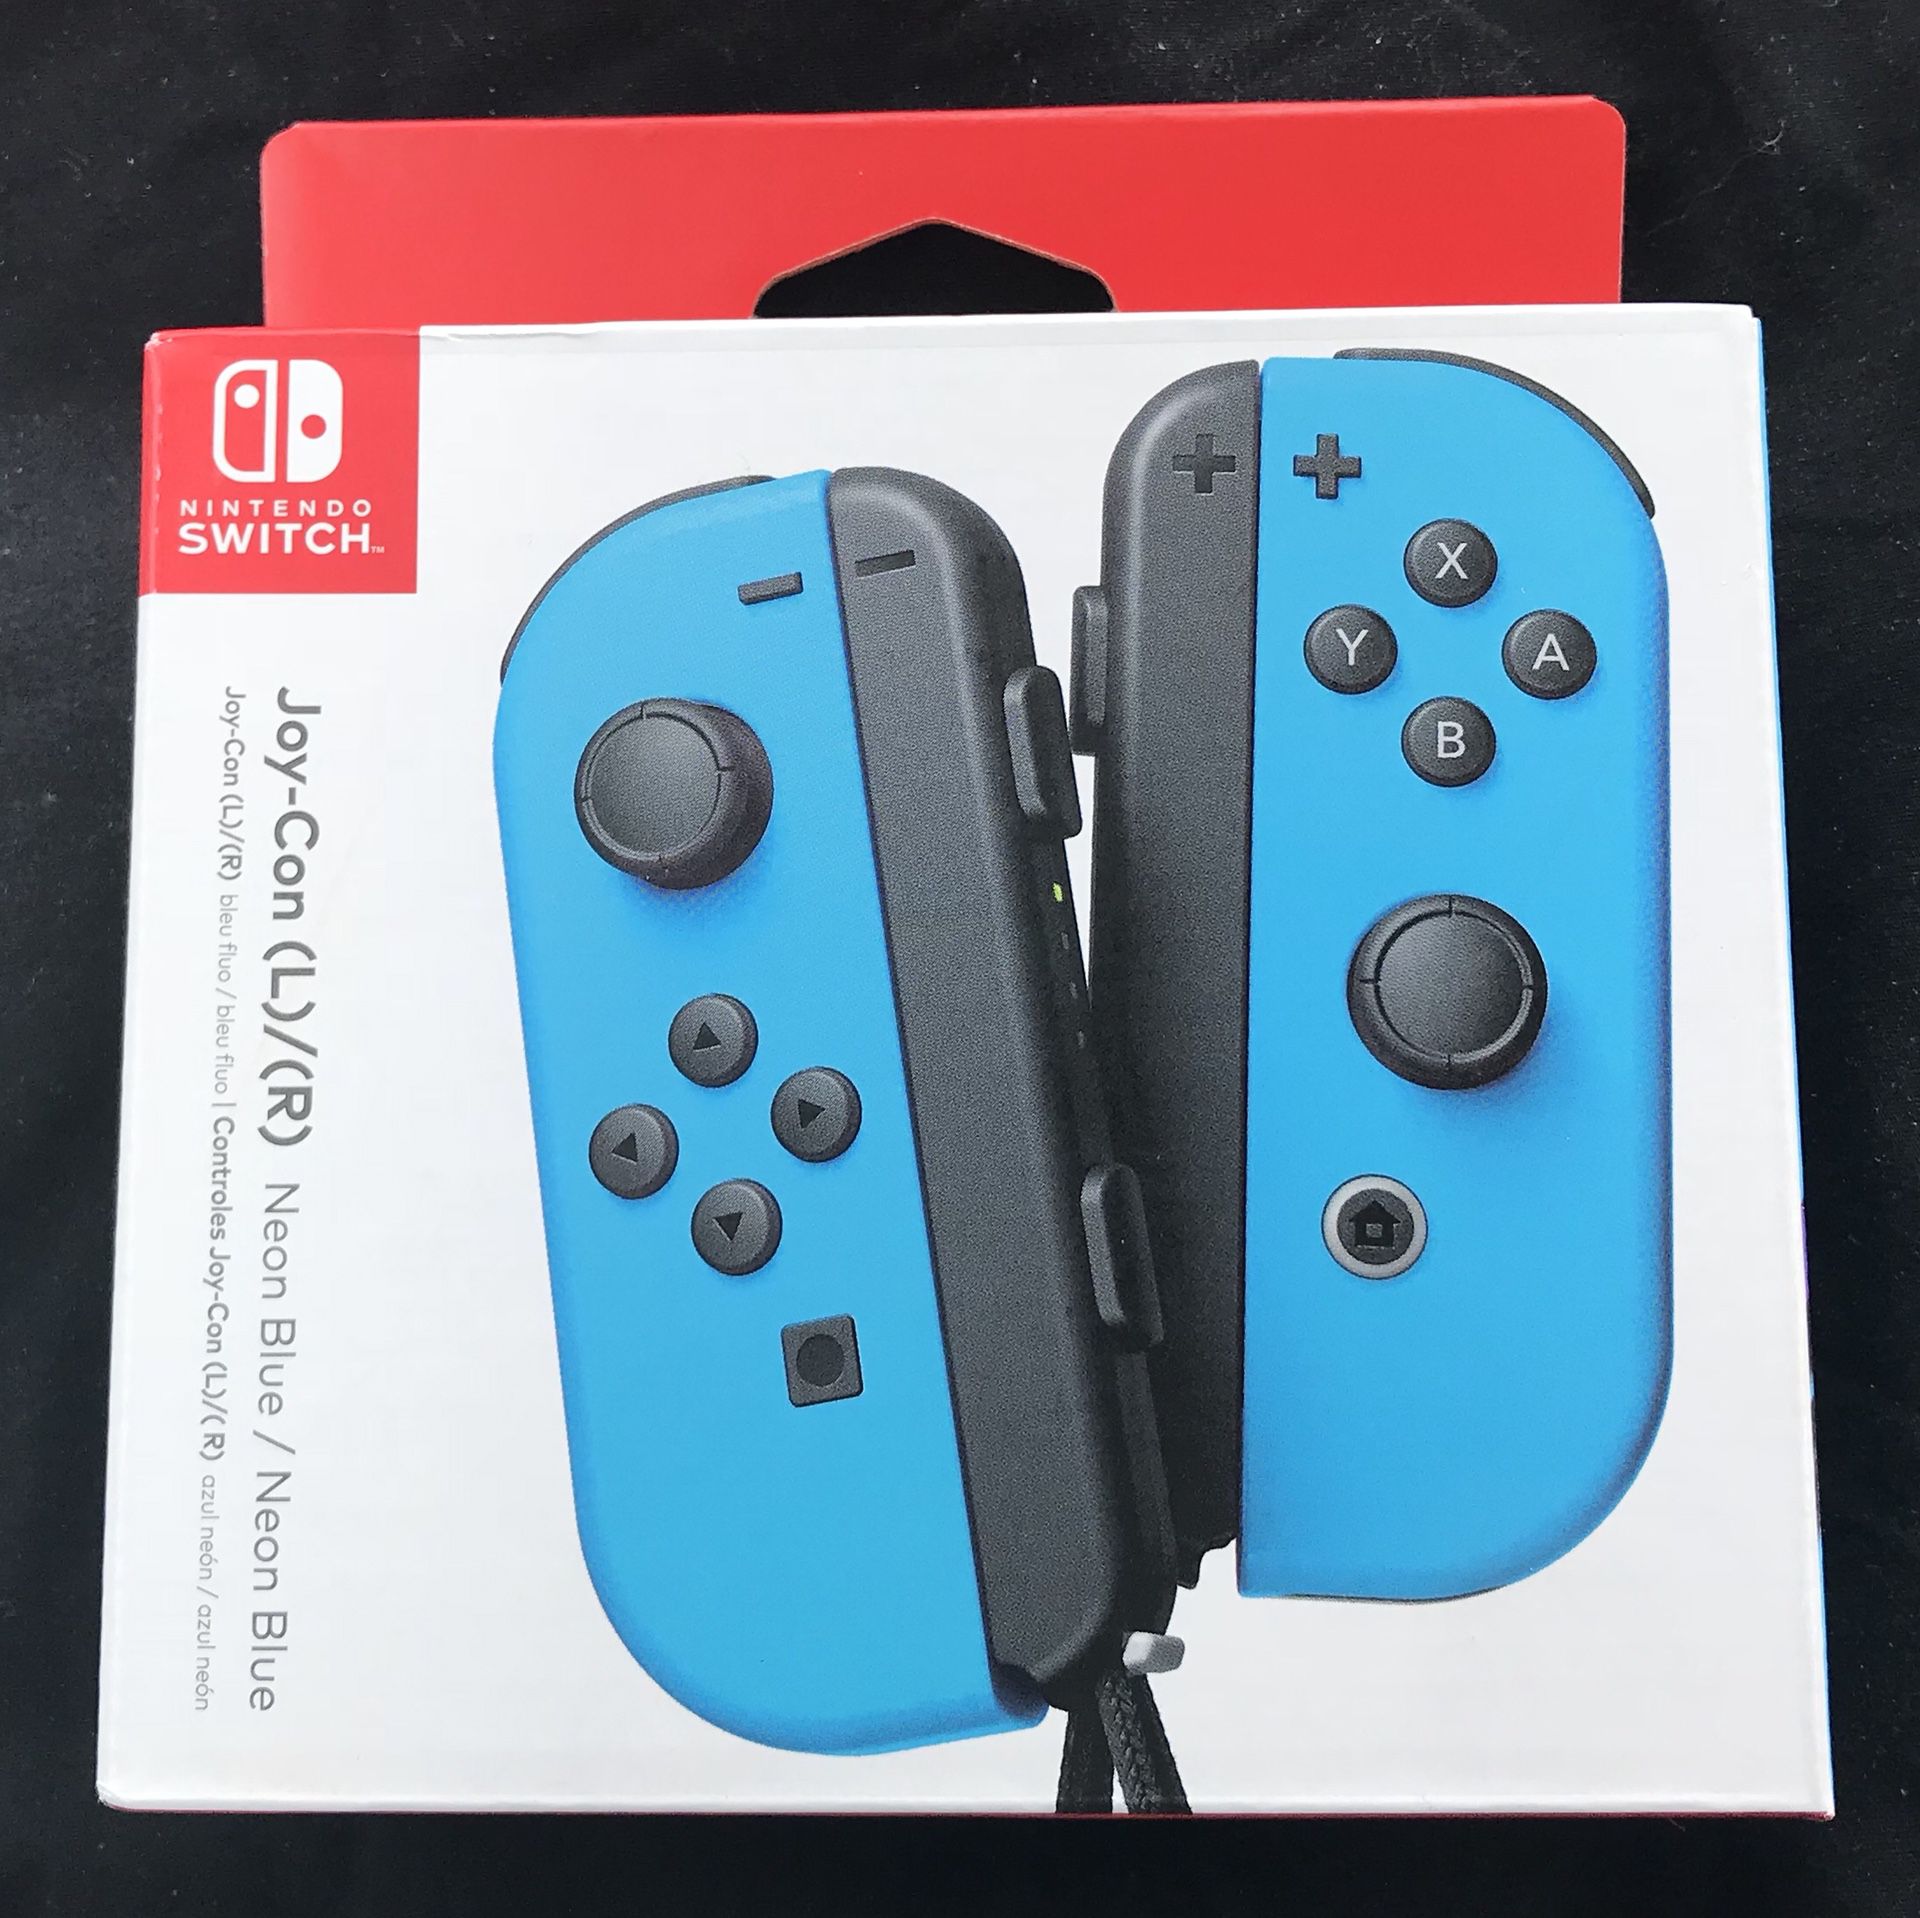 Nintendo Switch - Joy-Con (L/R) - Left Neon Red/ Right Neon Blue